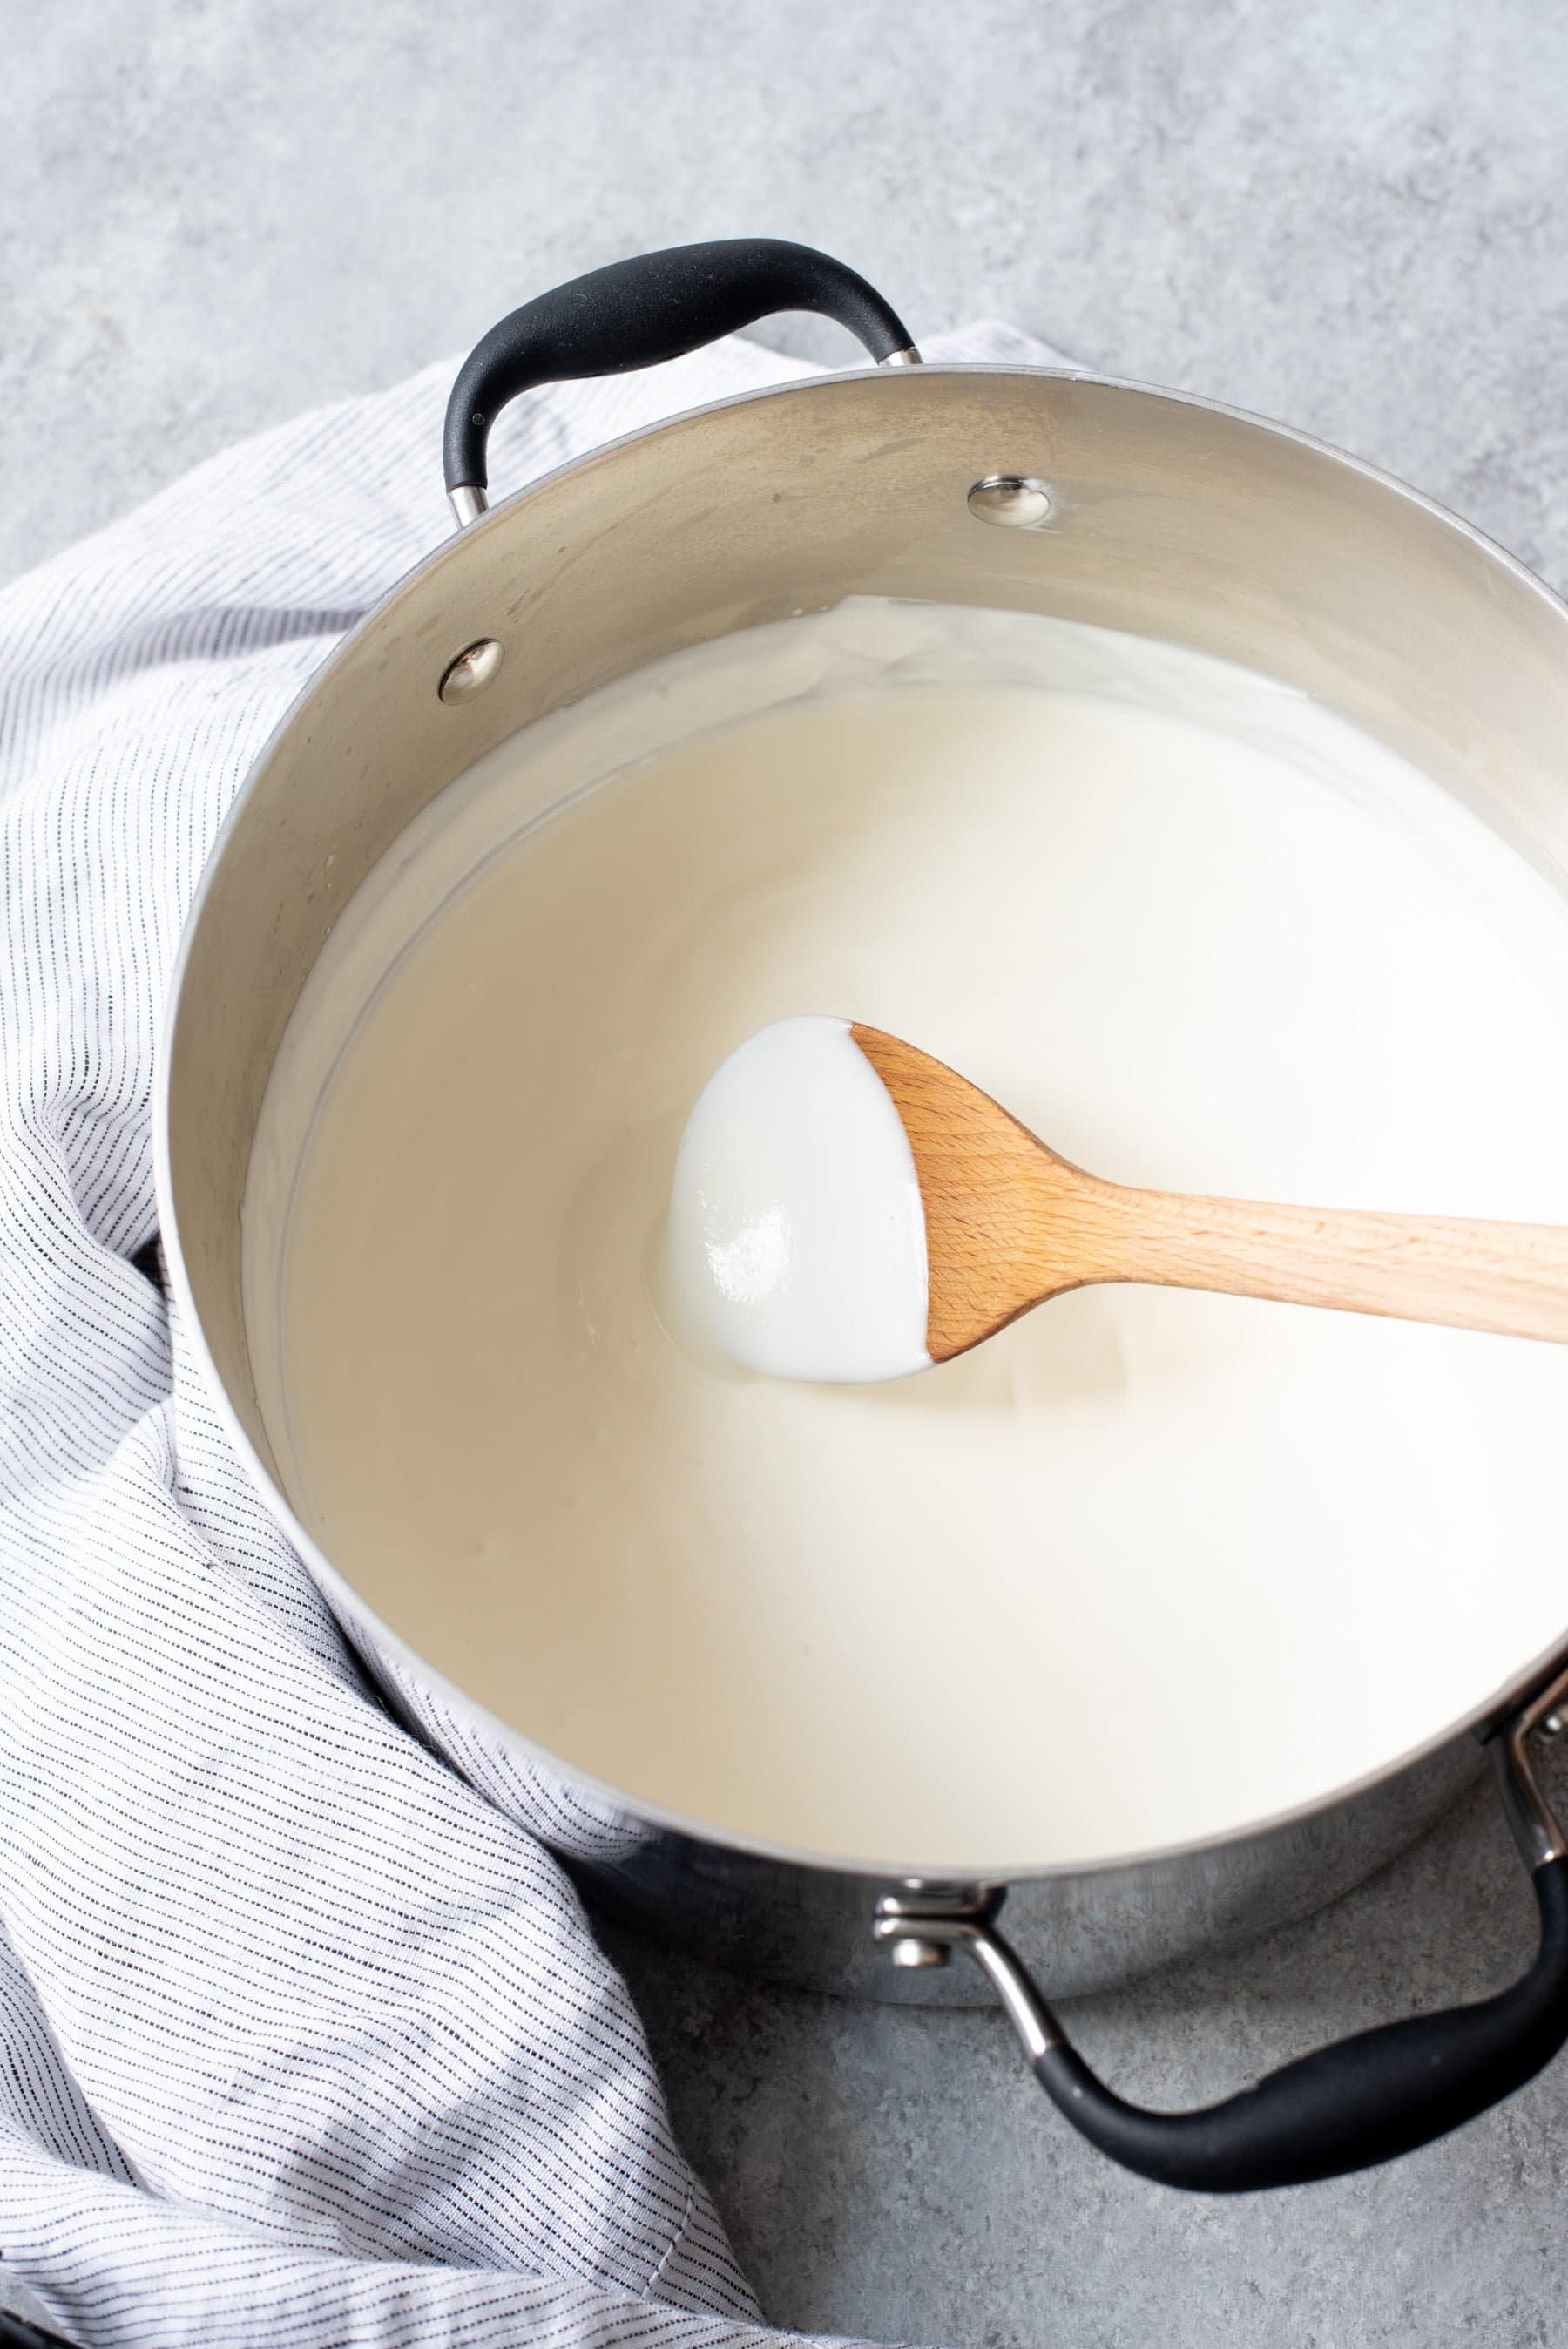 Wooden spoon stirring homemade yogurt in a soup pot